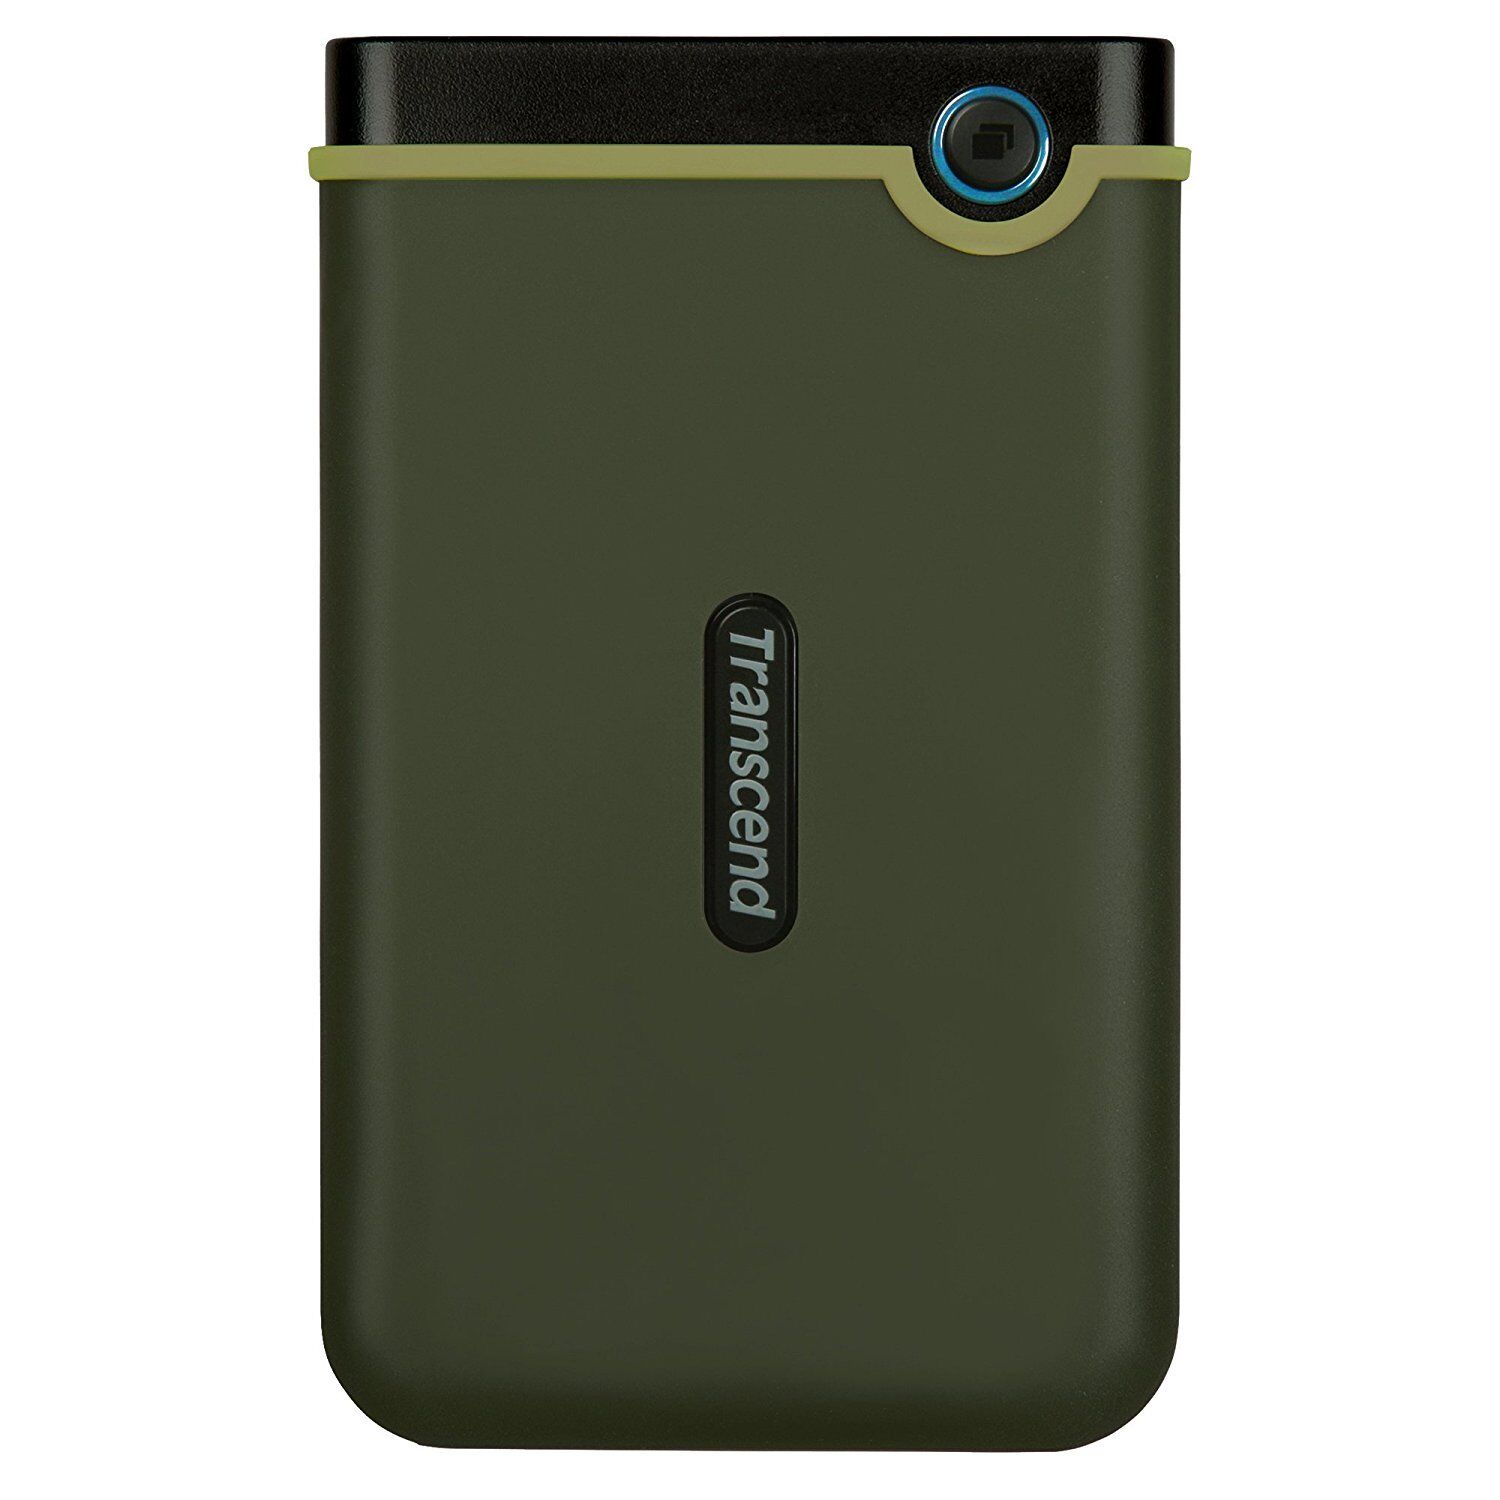 Transcend 2TB StoreJet 25M3 USB 3.0 Slim External Portable Hard Drive, Green  